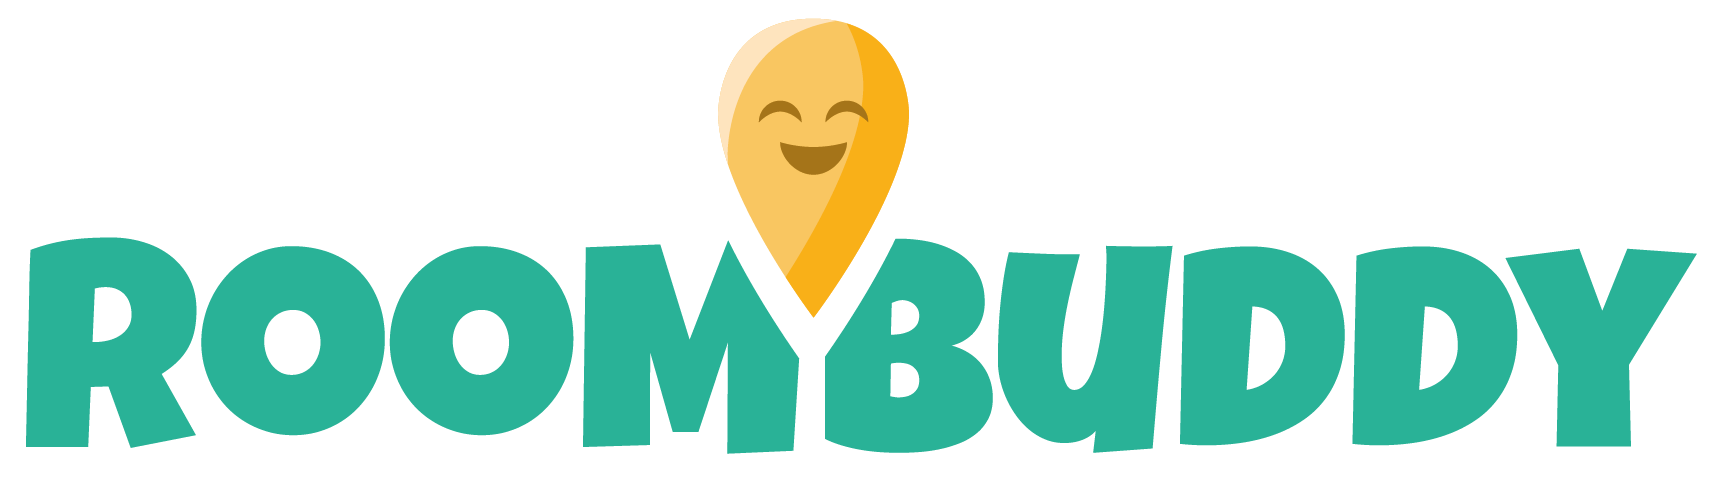 Roombuddy Logo